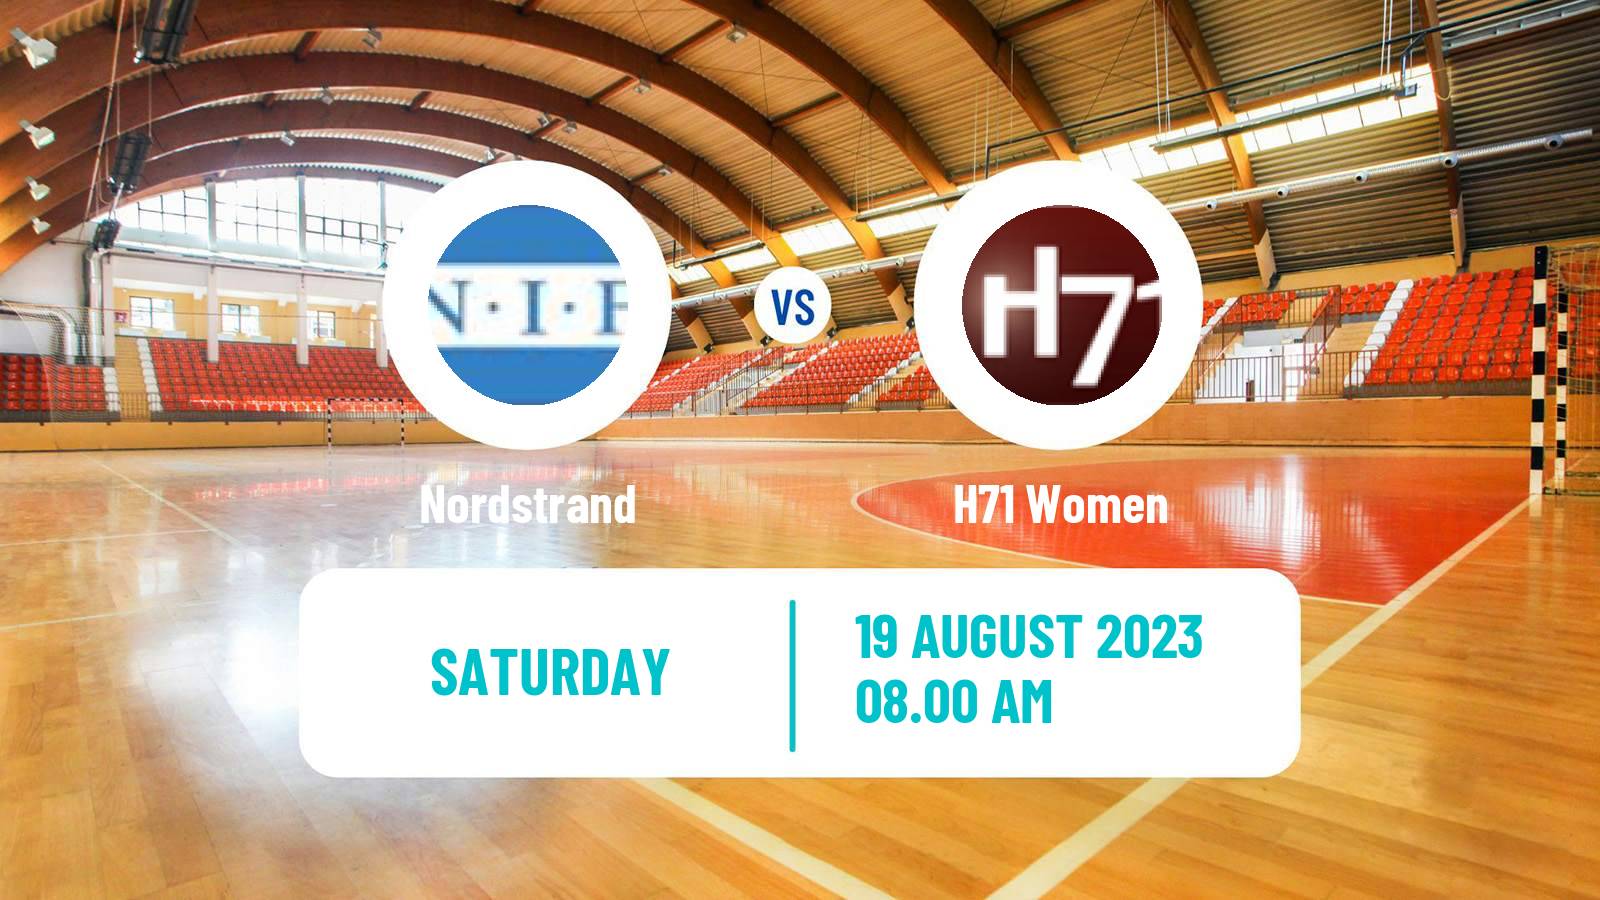 Handball Club Friendly Handball Women Nordstrand - H71